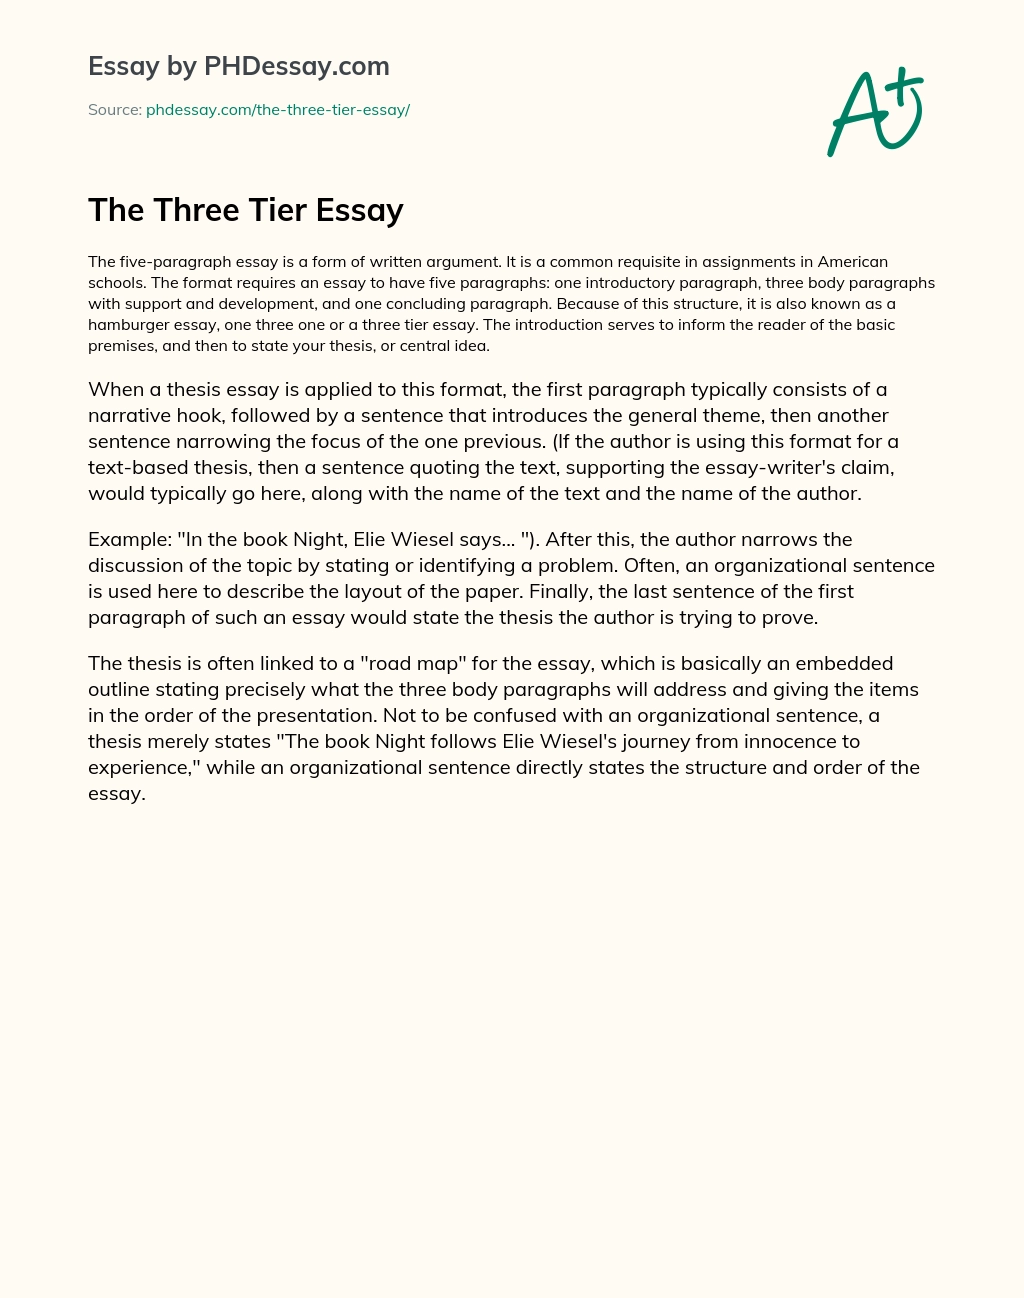 The Three Tier Essay - PHDessay.com